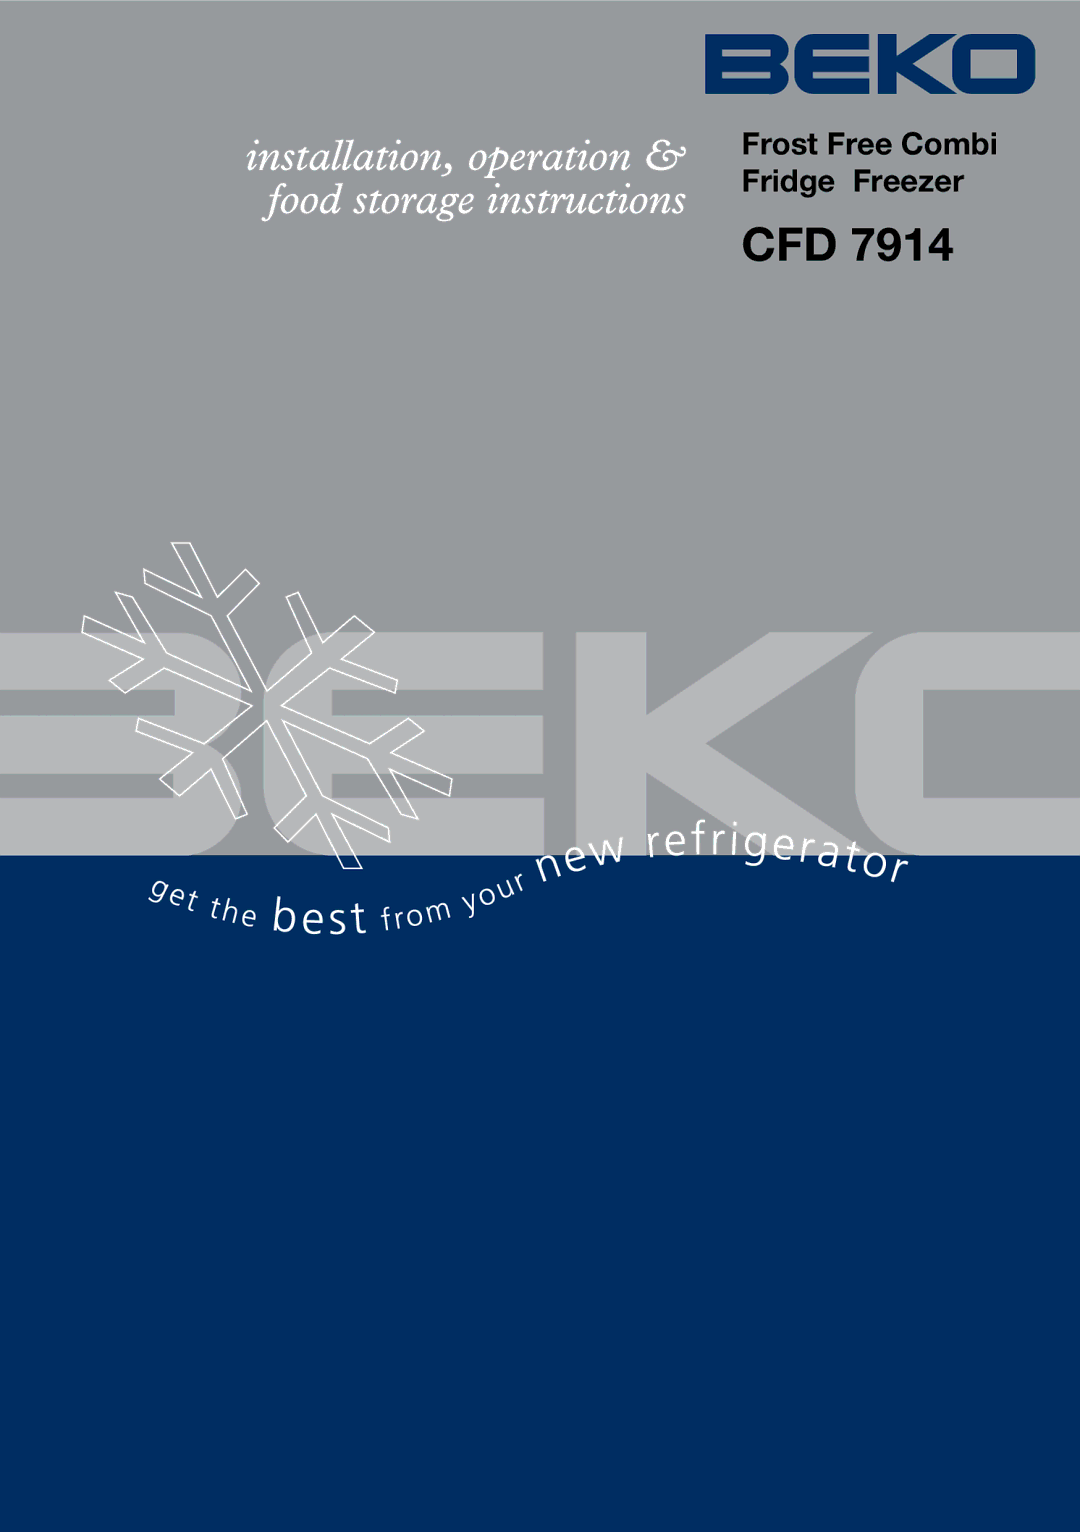 Beko CFD 7914 manual Cfd, Frost Free Combi Fridge Freezer 